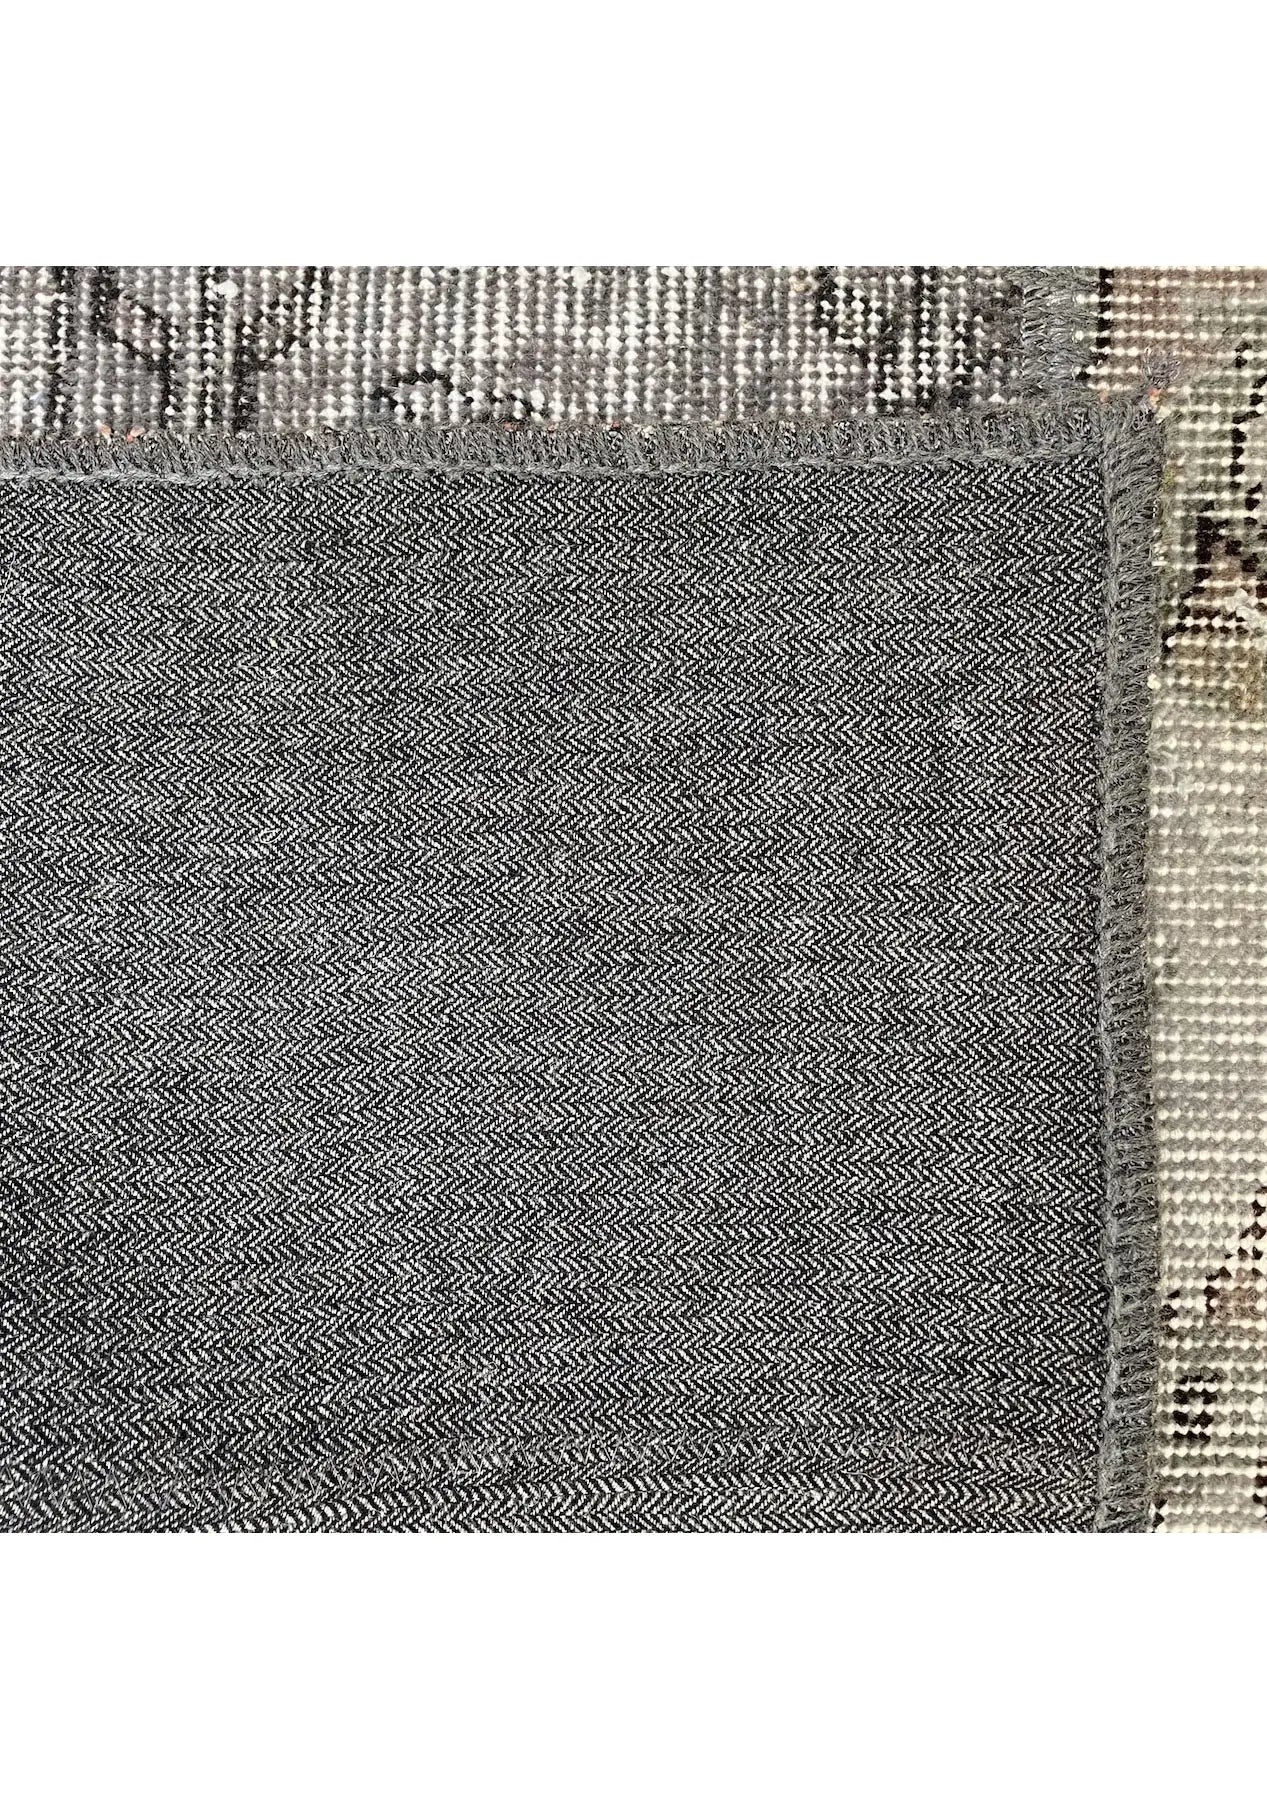 Kealy - Vintage Gray Patchwork Rug - kudenrugs